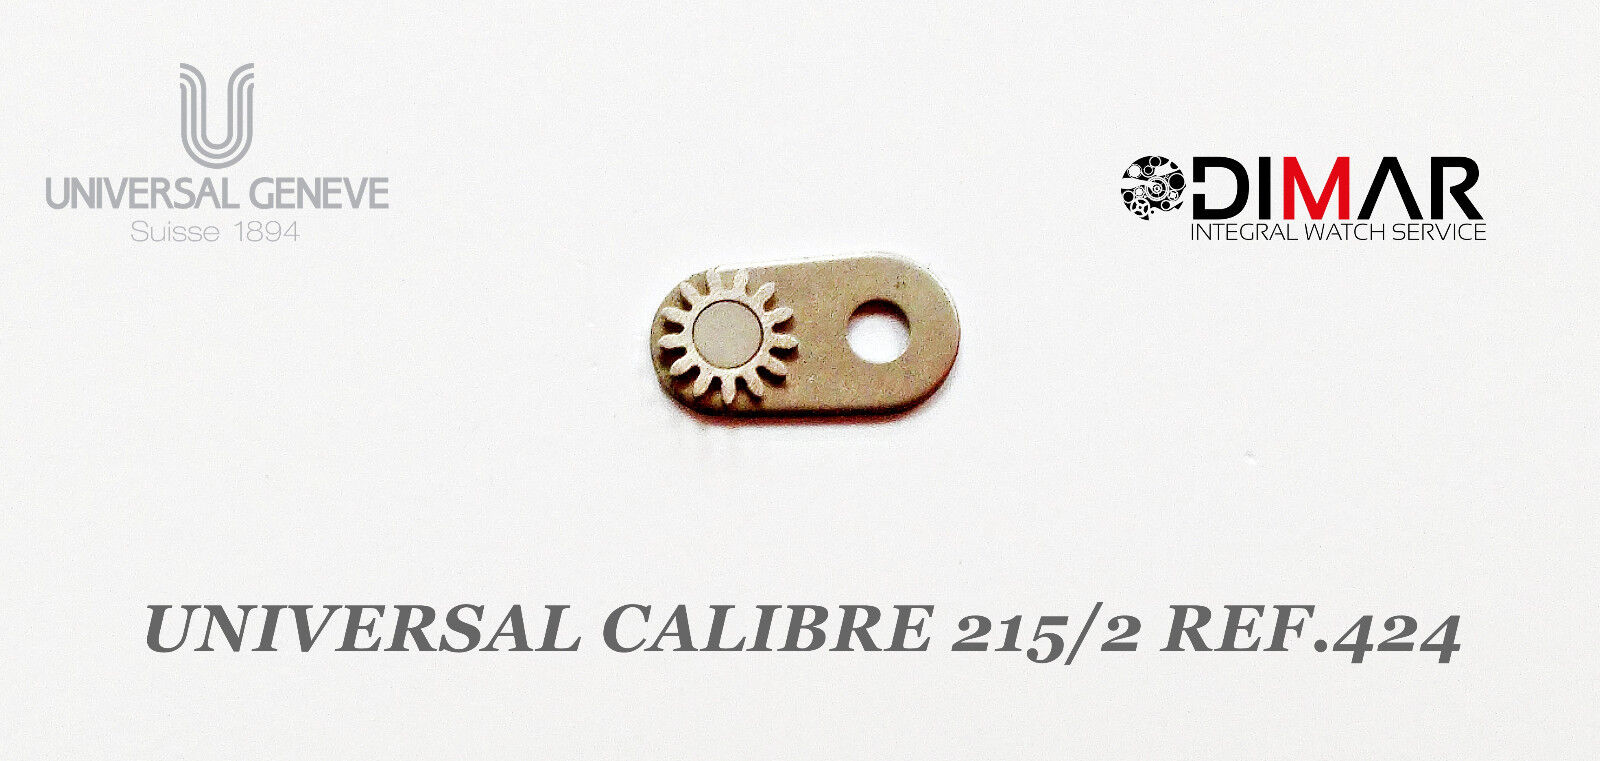 Universal Calibre 215/2. REF.424